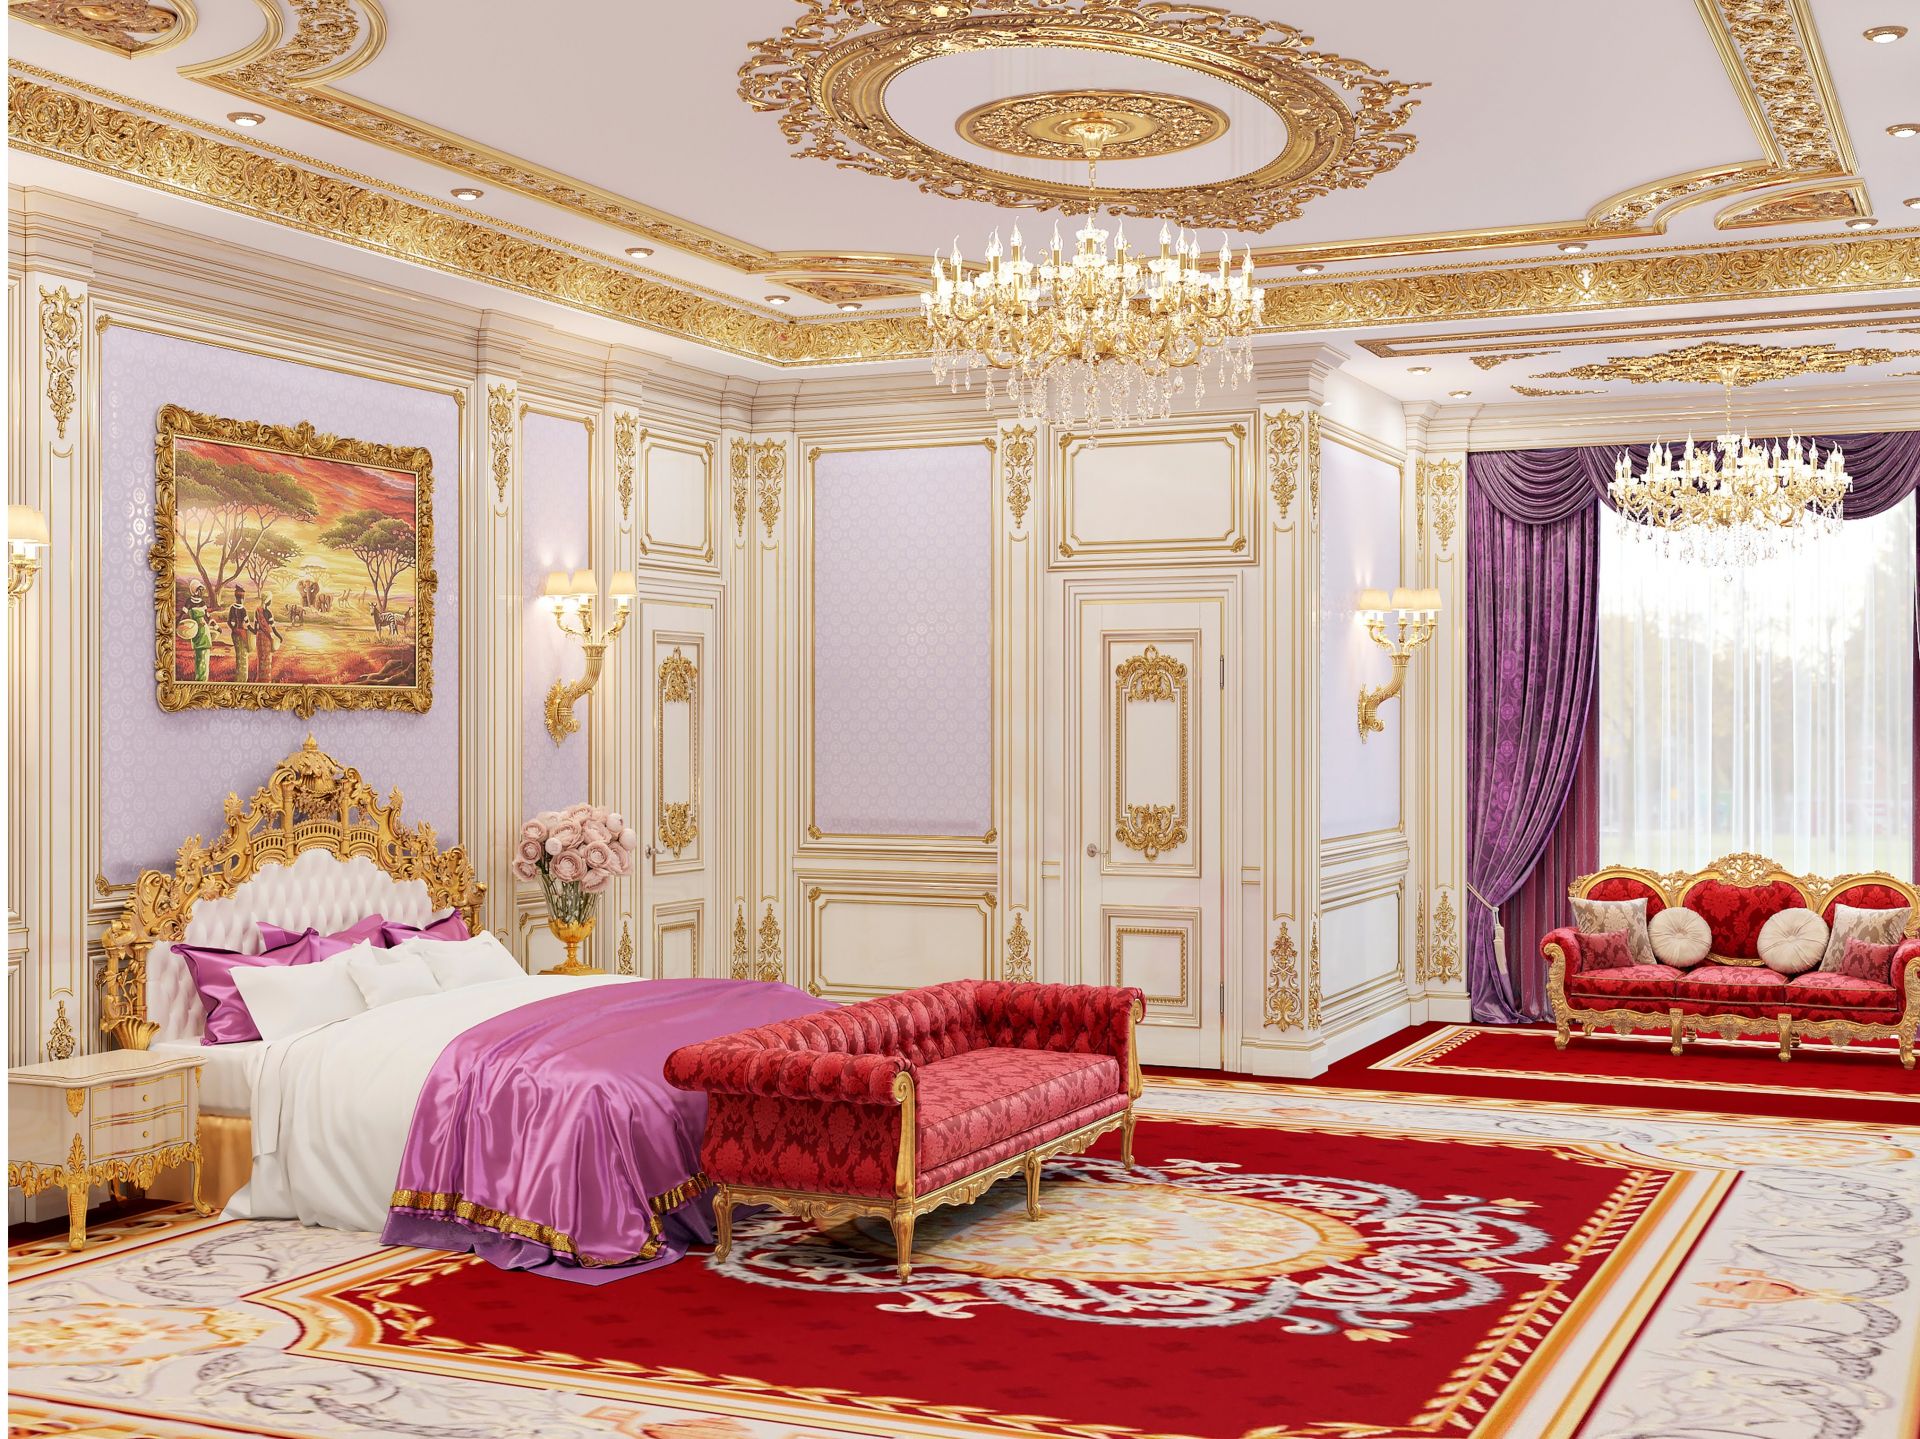 Design, Luxury bedroom interior design